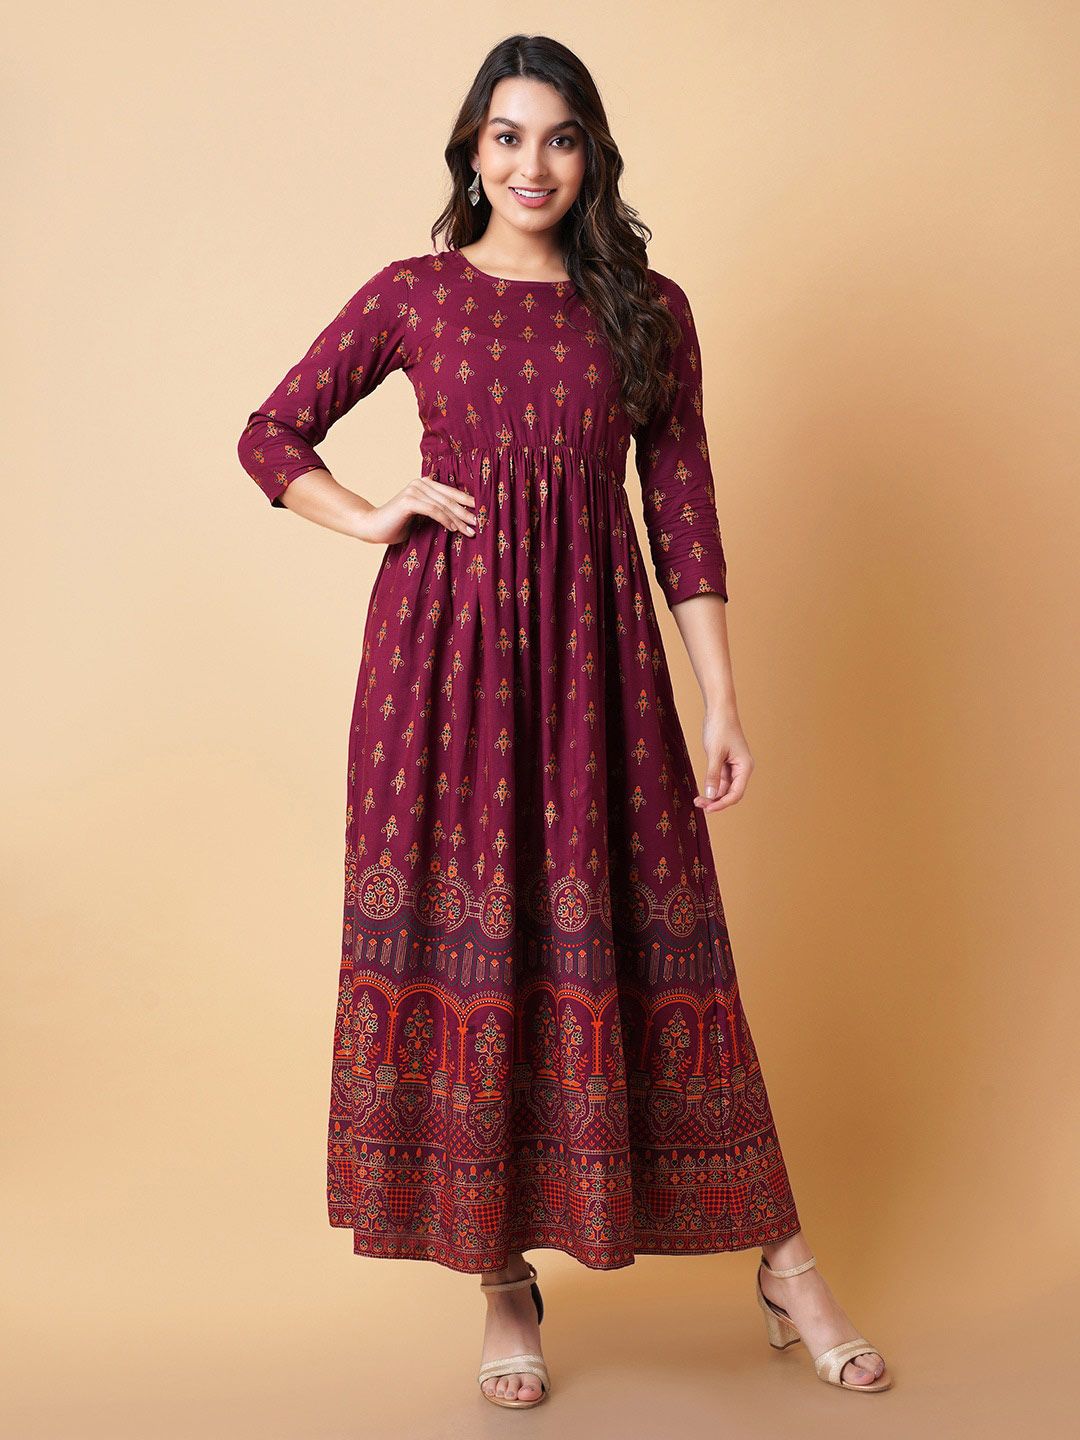 DAEVISH Ethnic Motifs Printed Maxi Dress Price in India